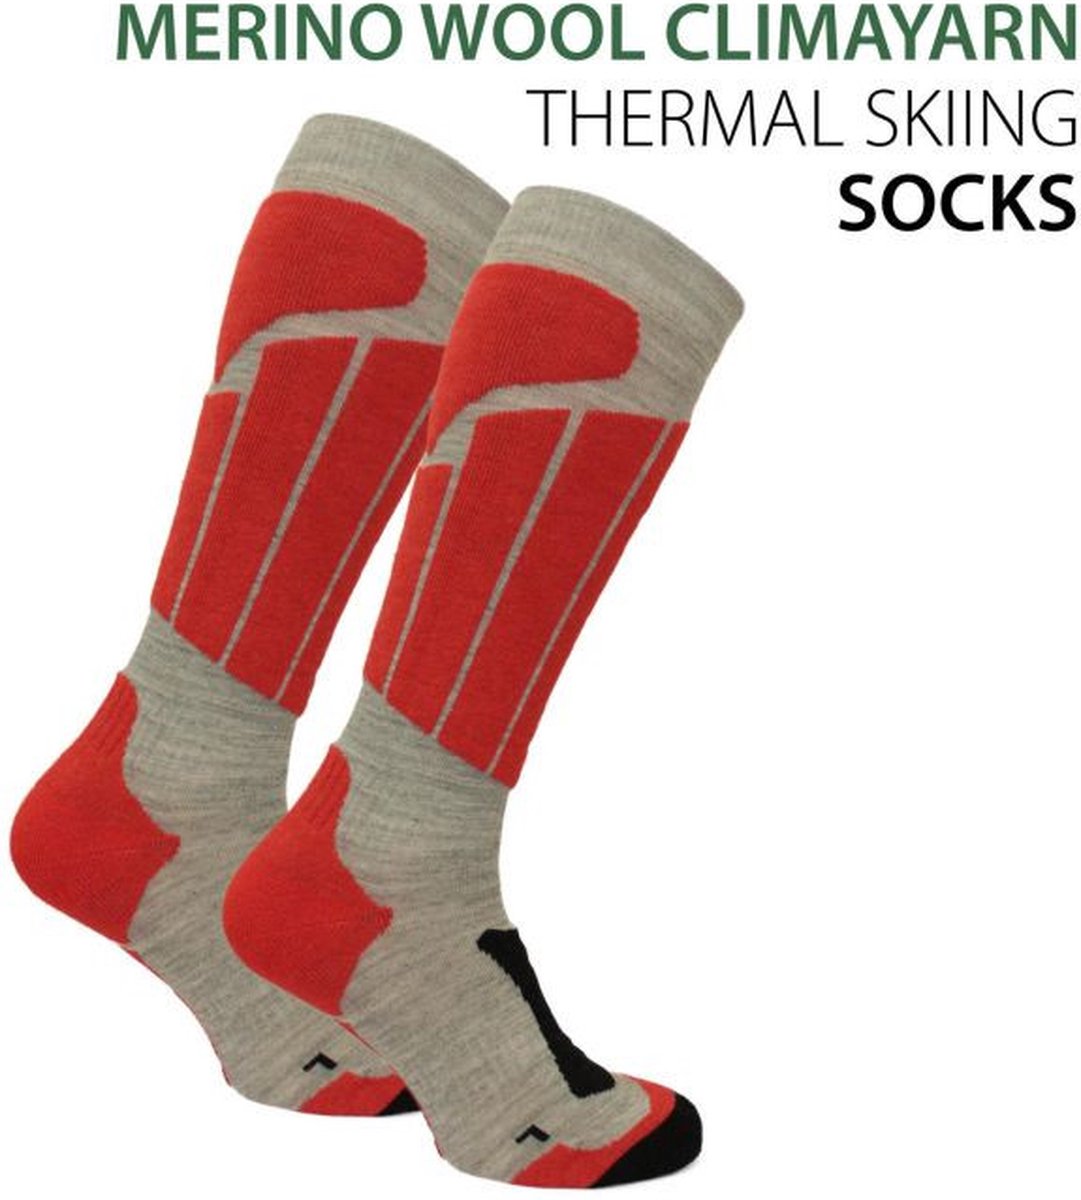 Norfolk Skisokken - Merino wol Climayarn - Warm en Droog Thermo Skisokken met Zonedemping - Maat 47-50 - Rood - Aspen